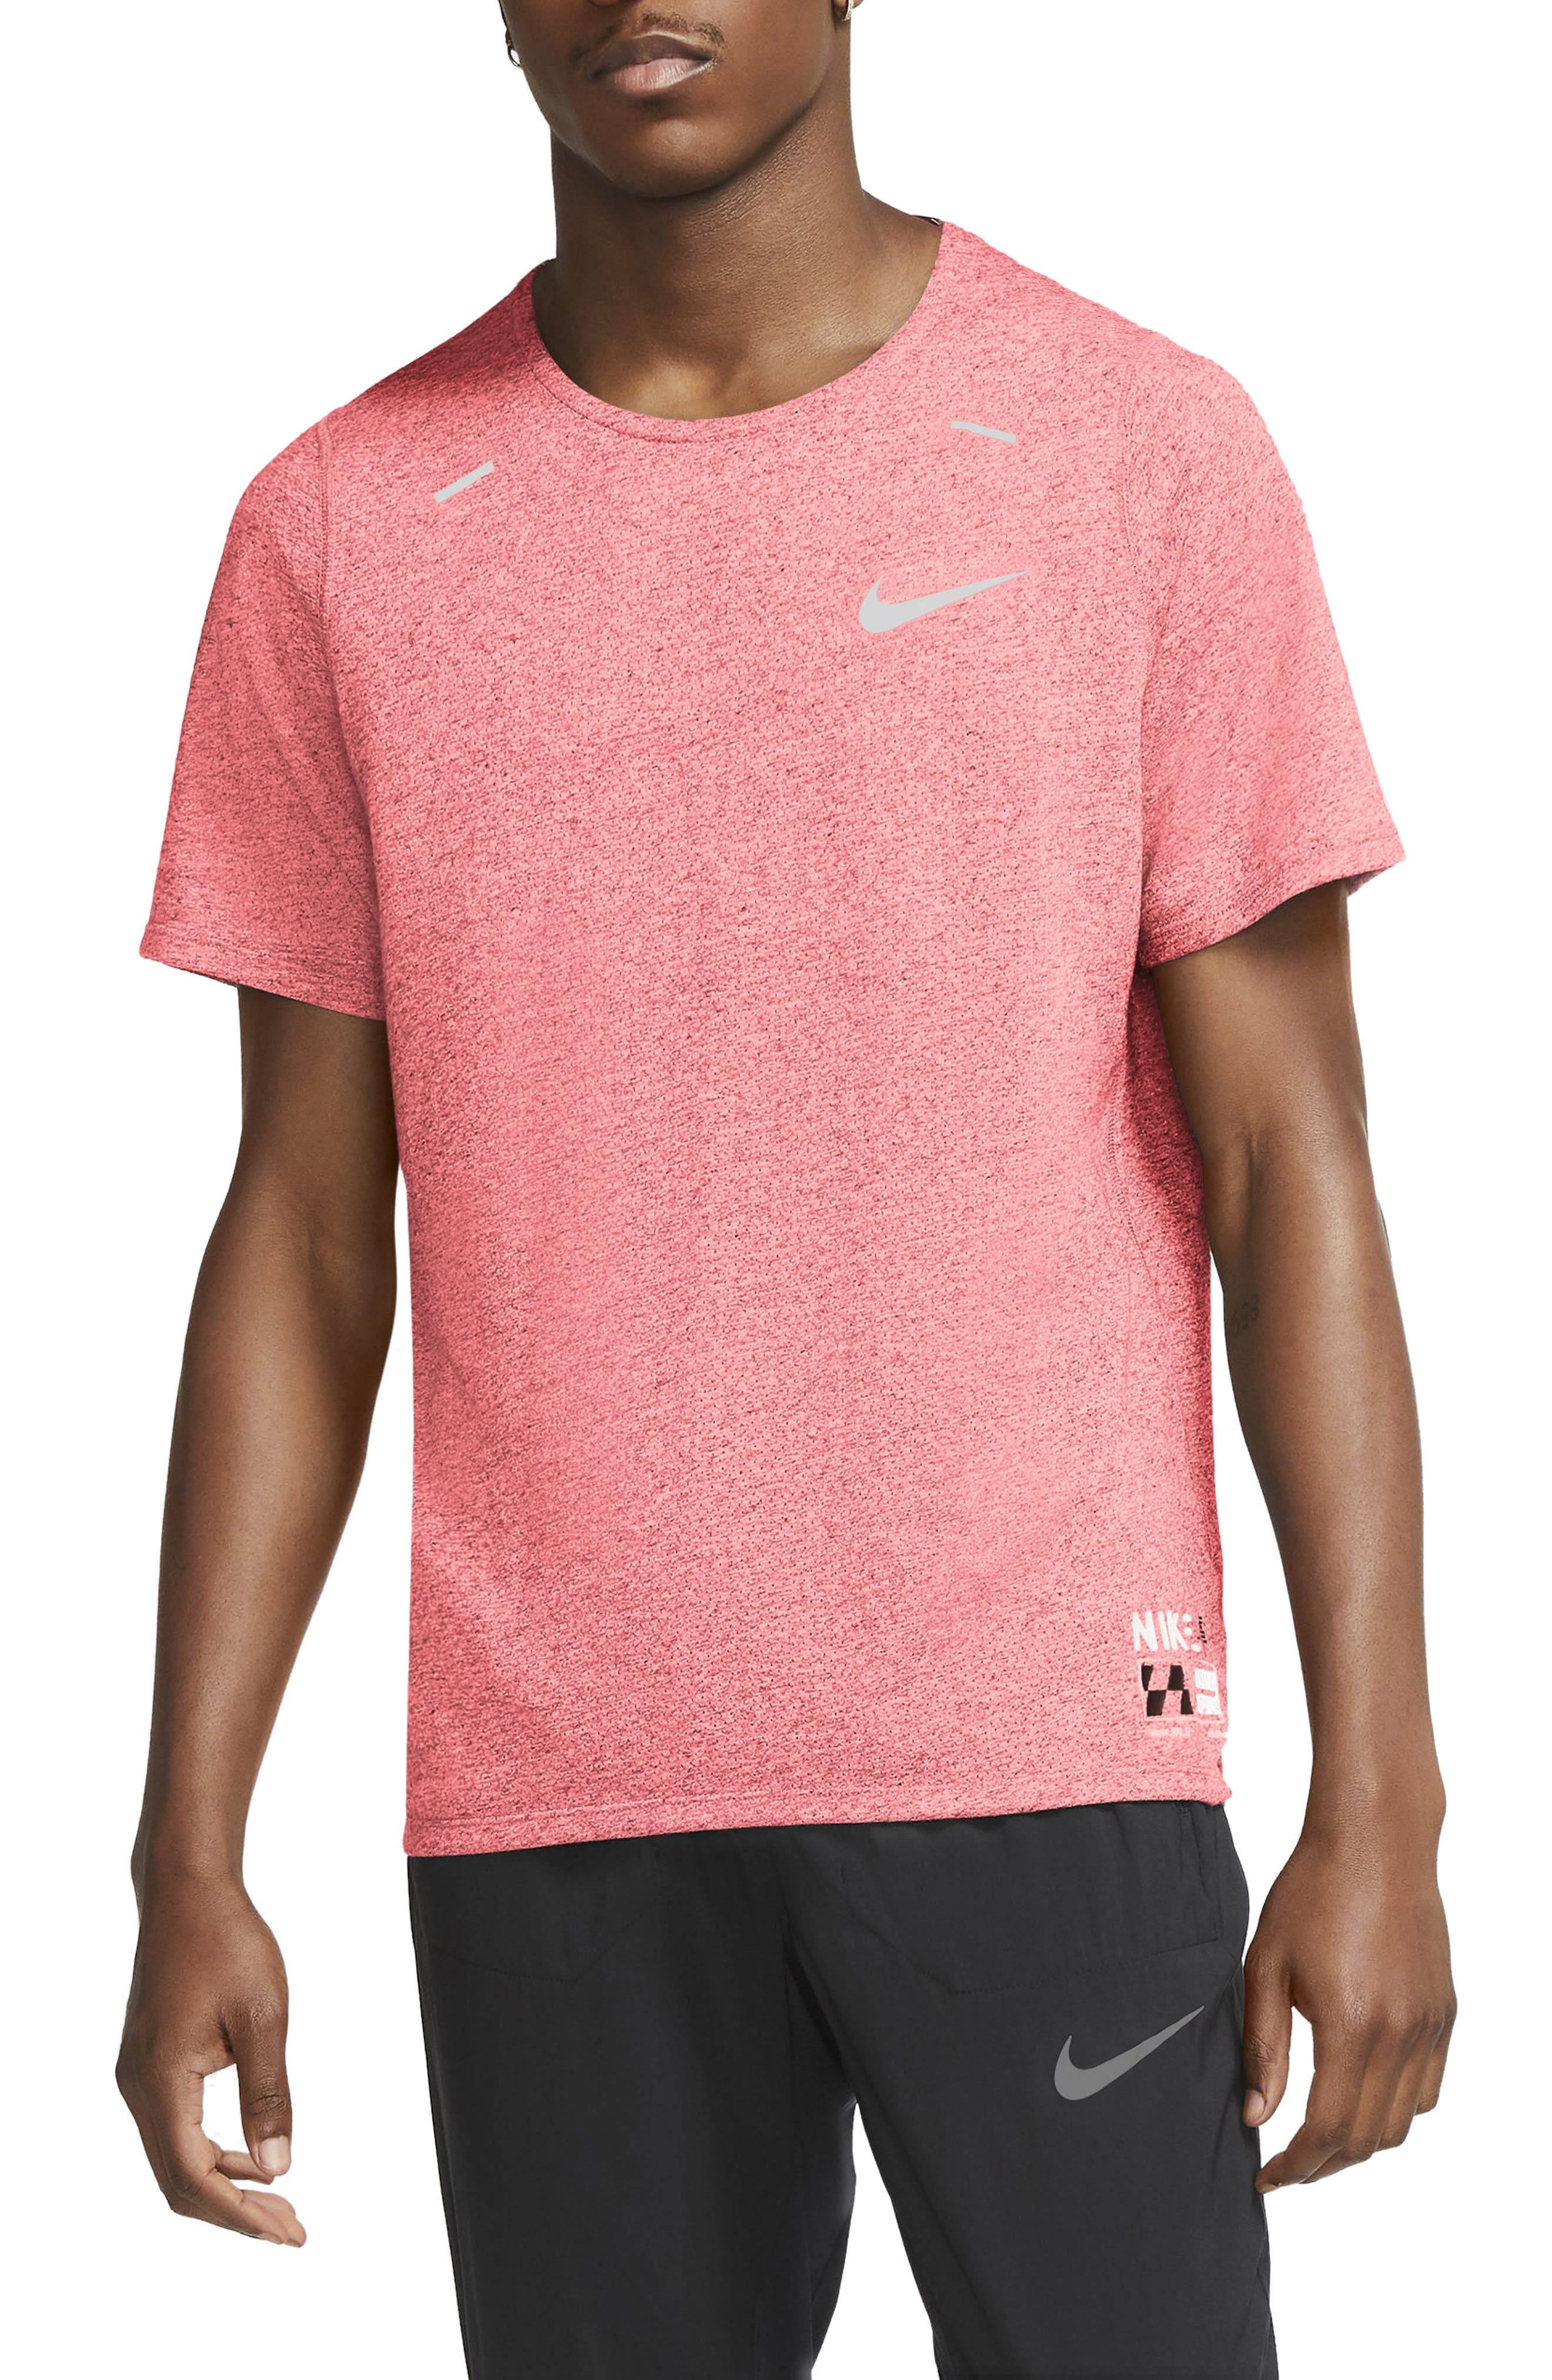 Men's Pink Nike Clothing | Nordstrom